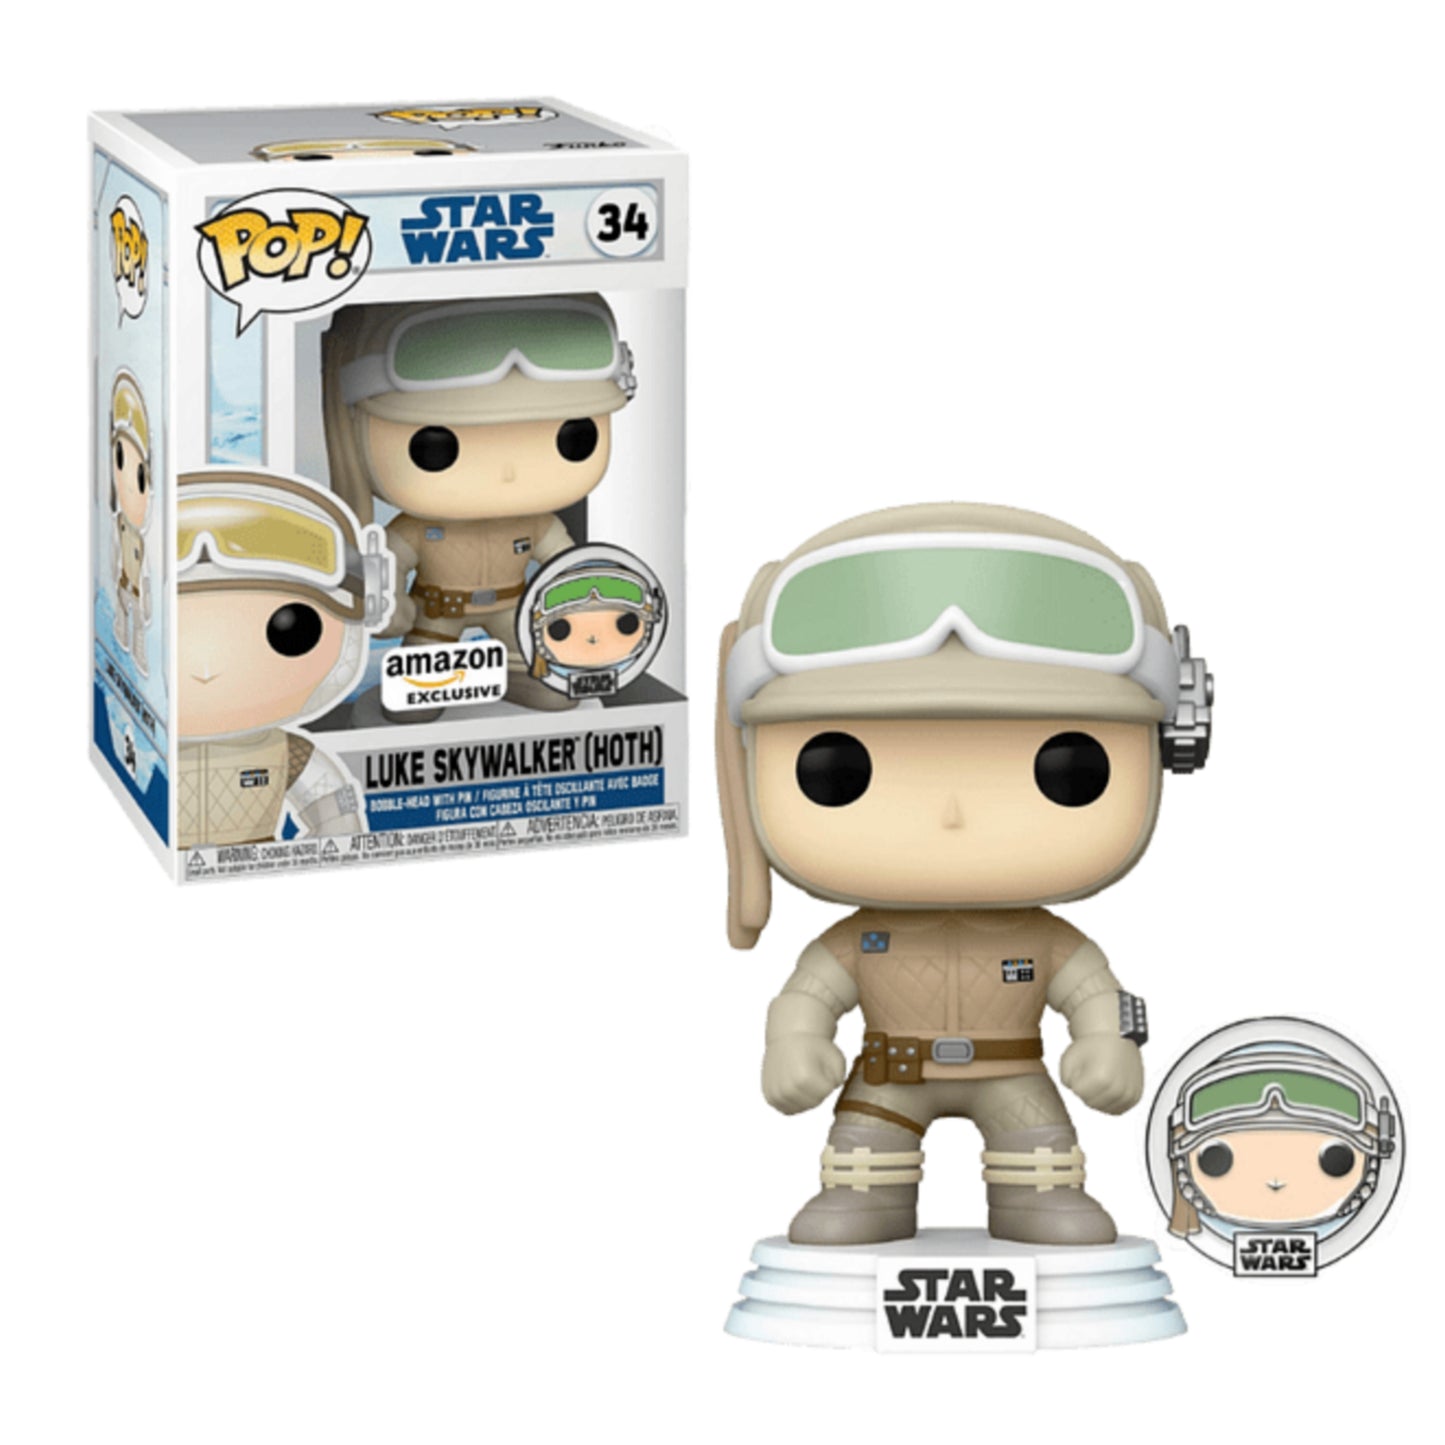 Funko Pop! 34 Luke Skywalker (Hoth) [Star Wars] - Amazon Exclusive